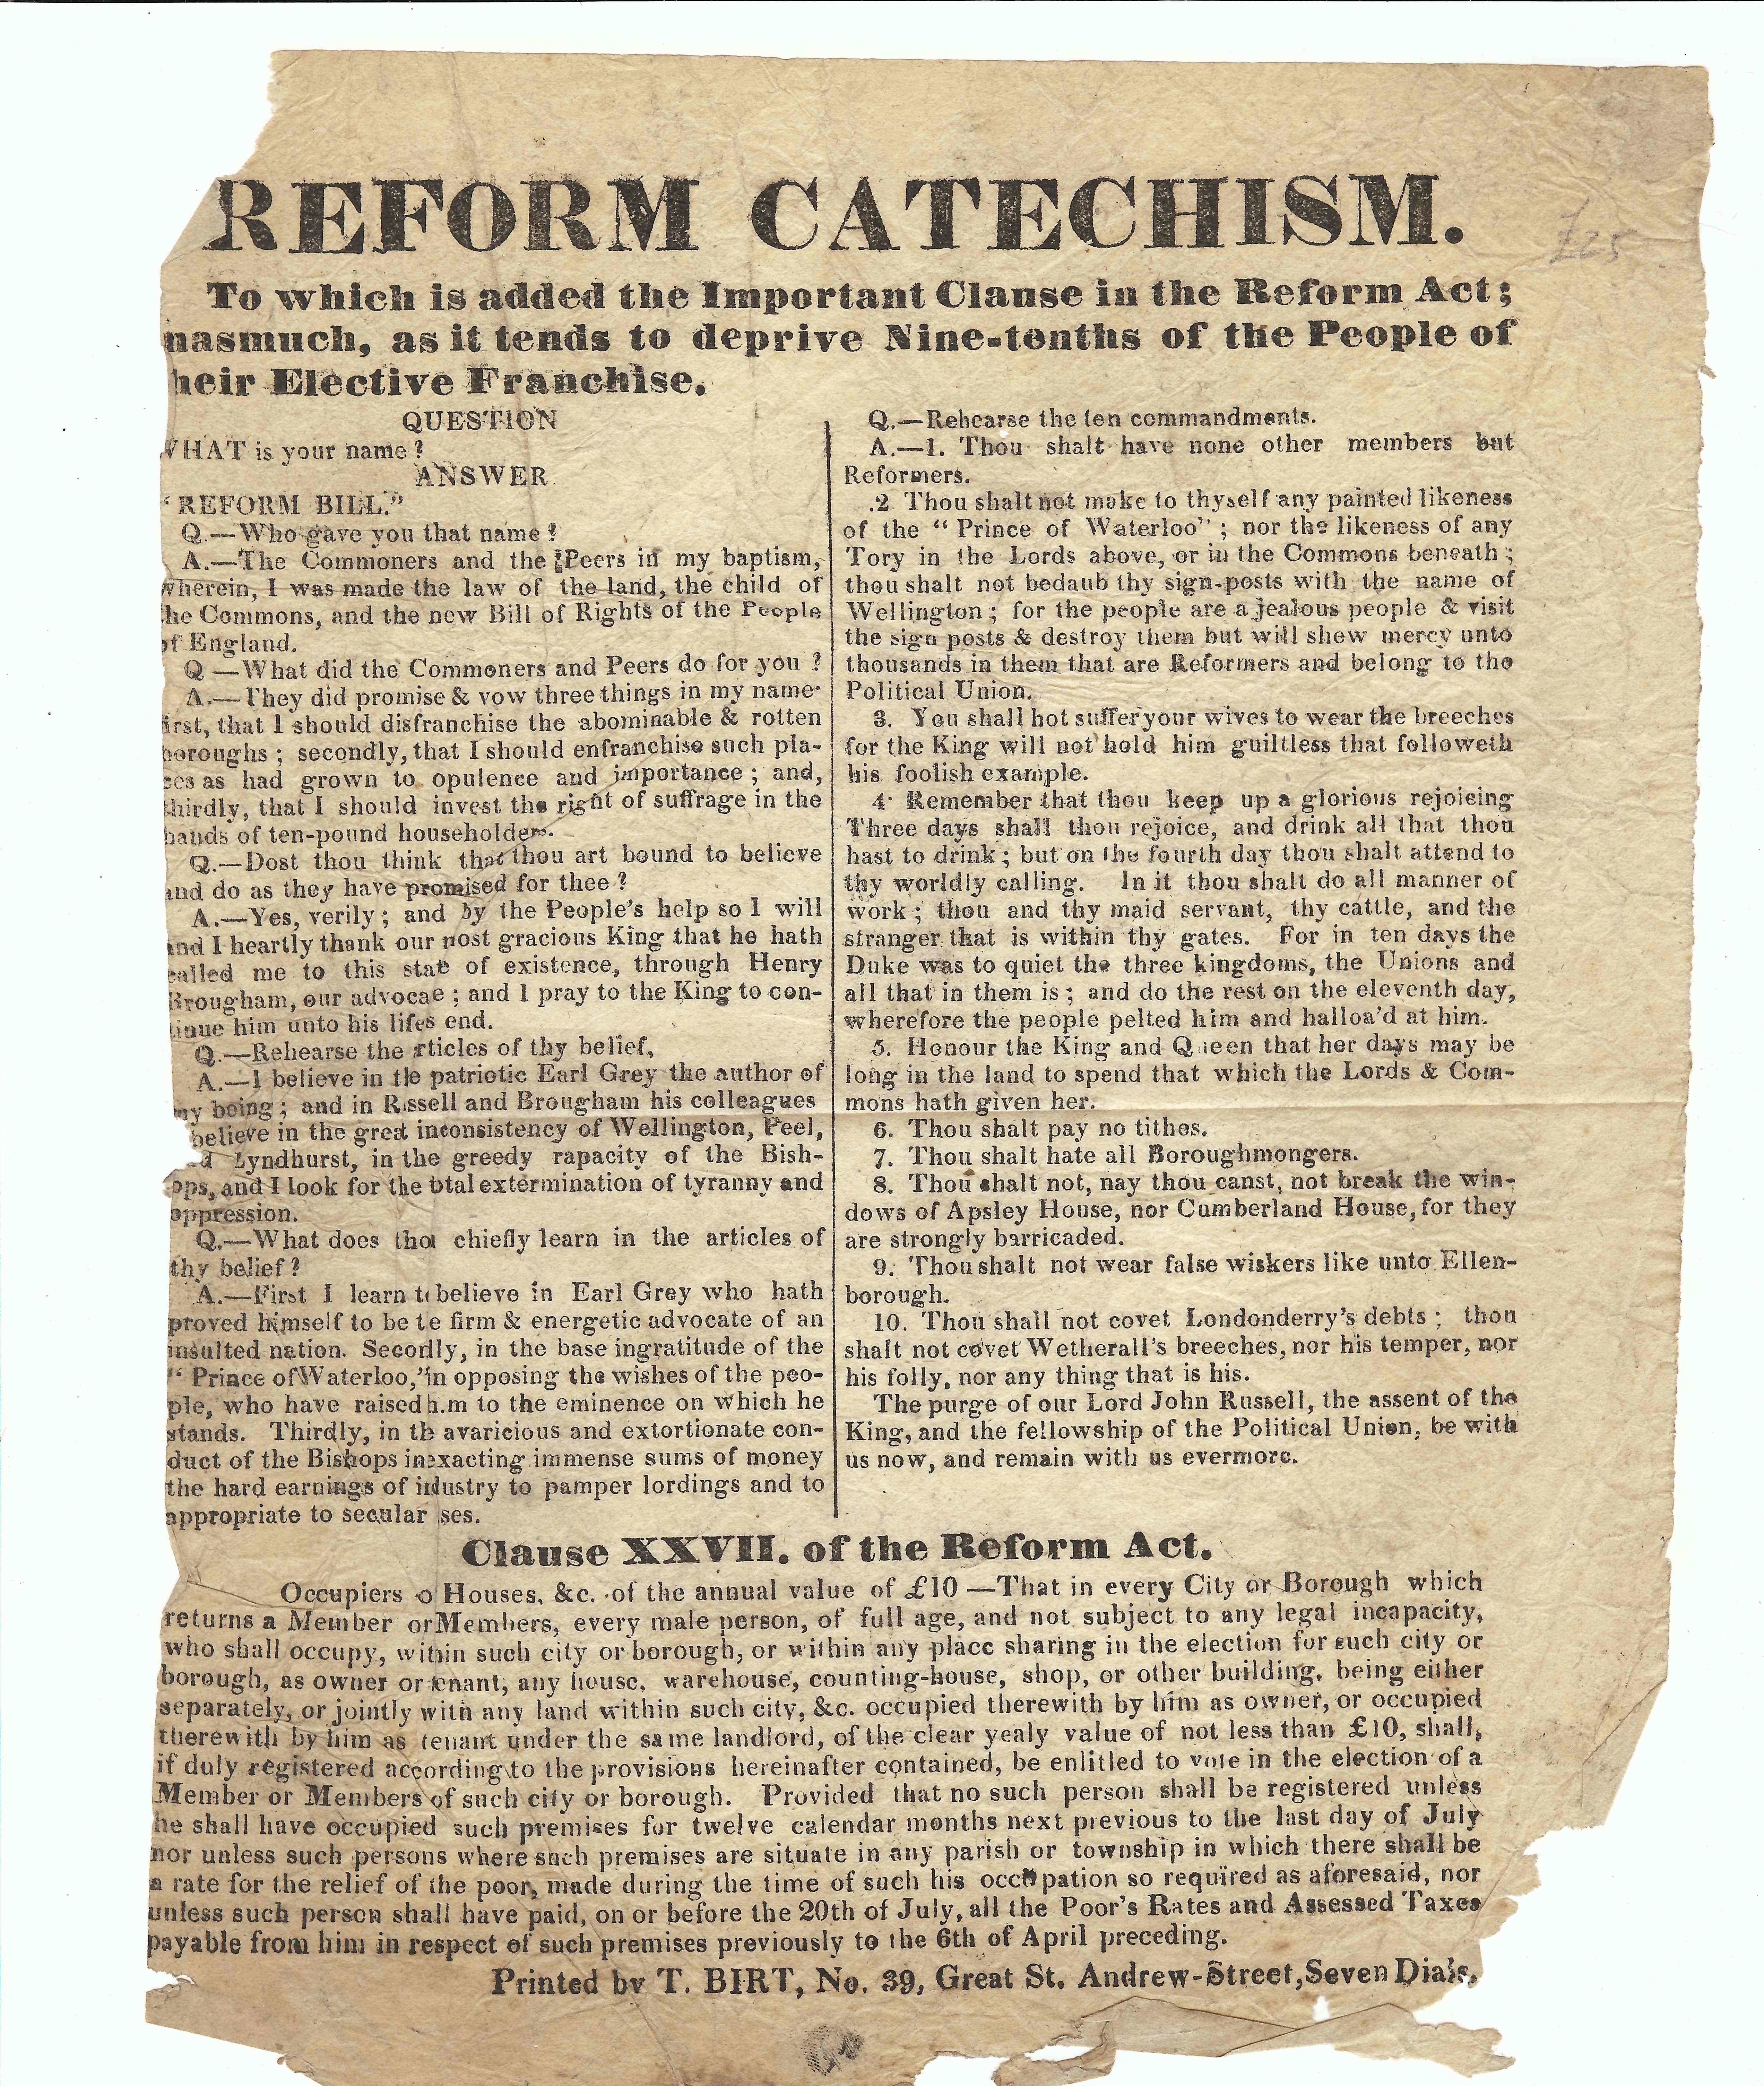 http://blogs.princeton.edu/rarebooks/images/Reform_Catechism.JPG